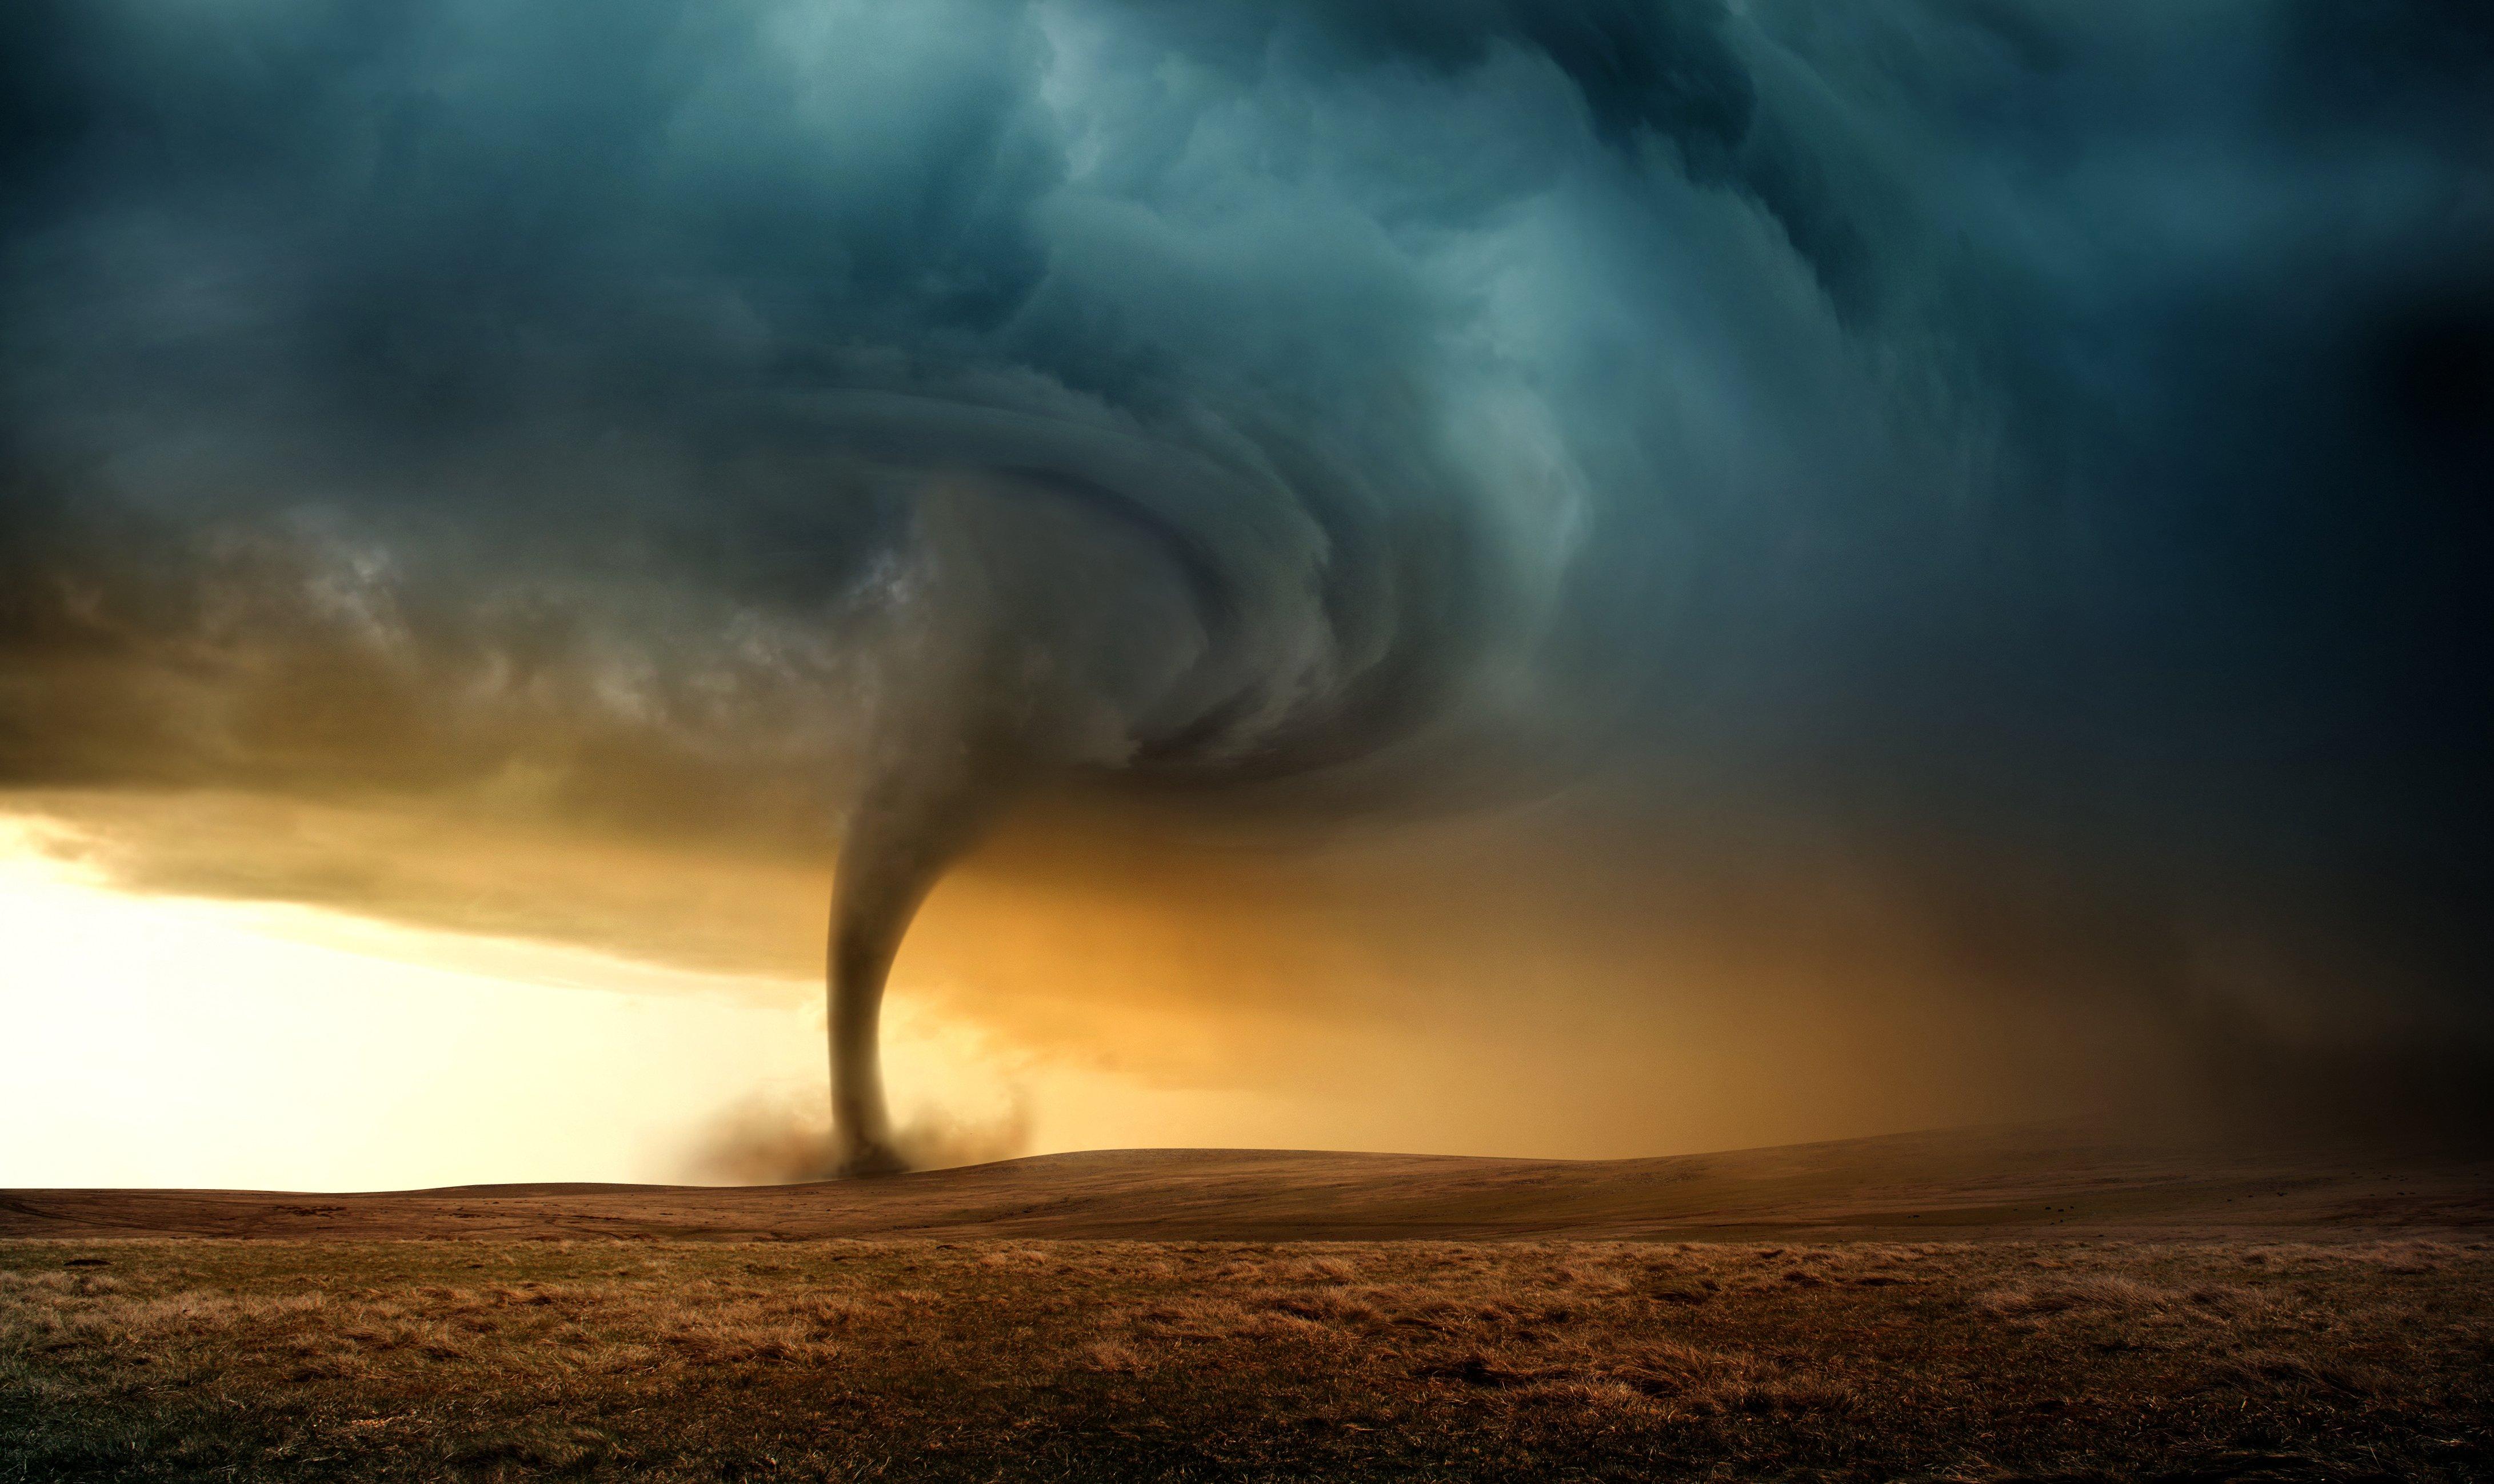 A large tornado touches down on a plain.